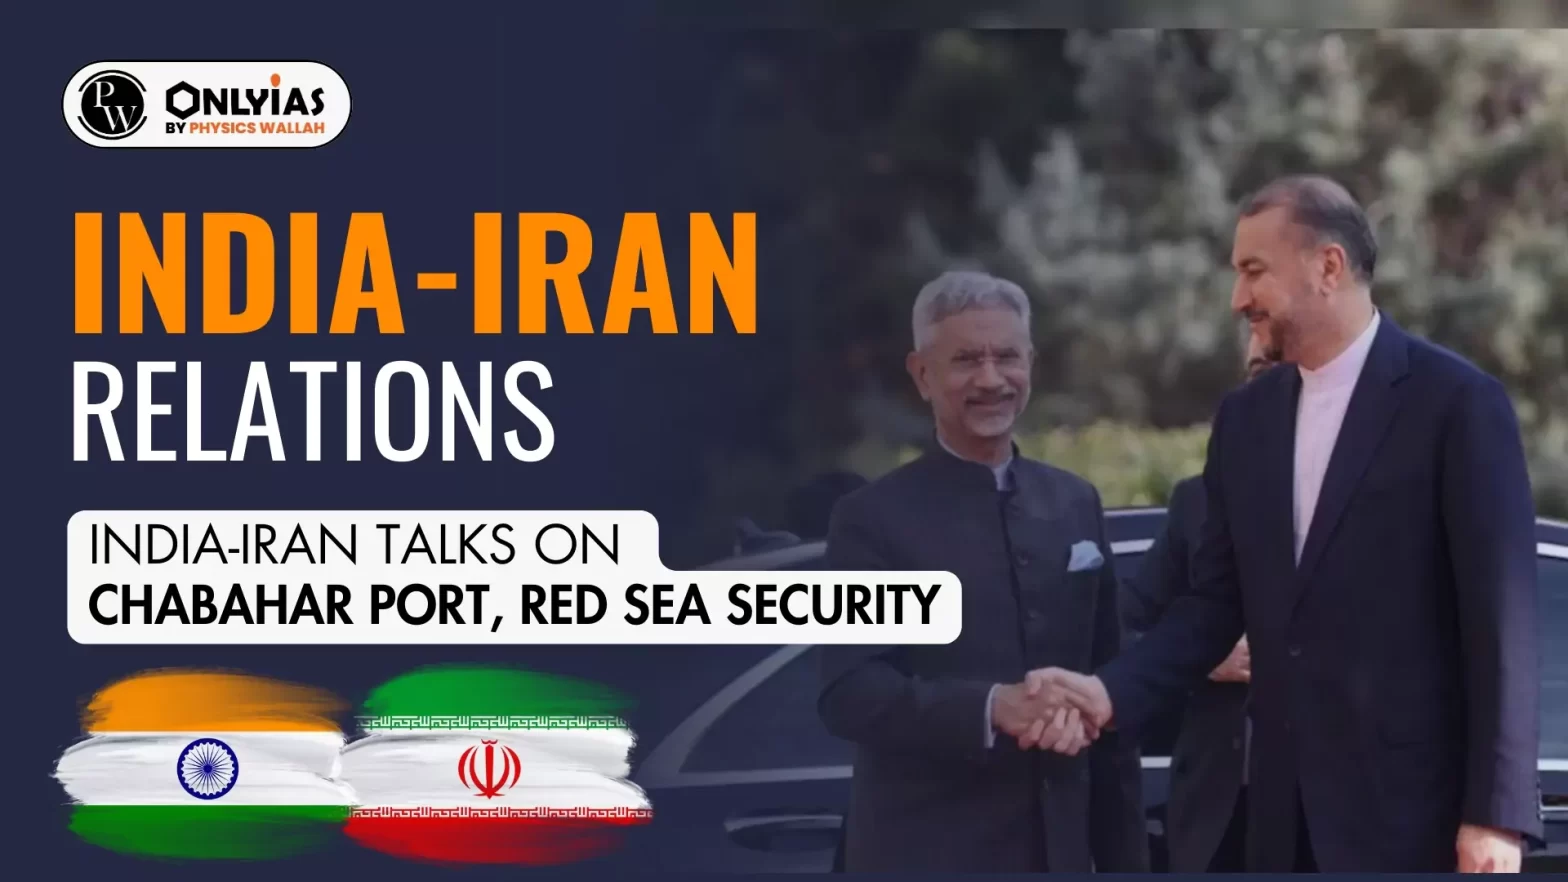 India-Iran Relations: India-Iran Talks on Chabahar Port, Red Sea Security